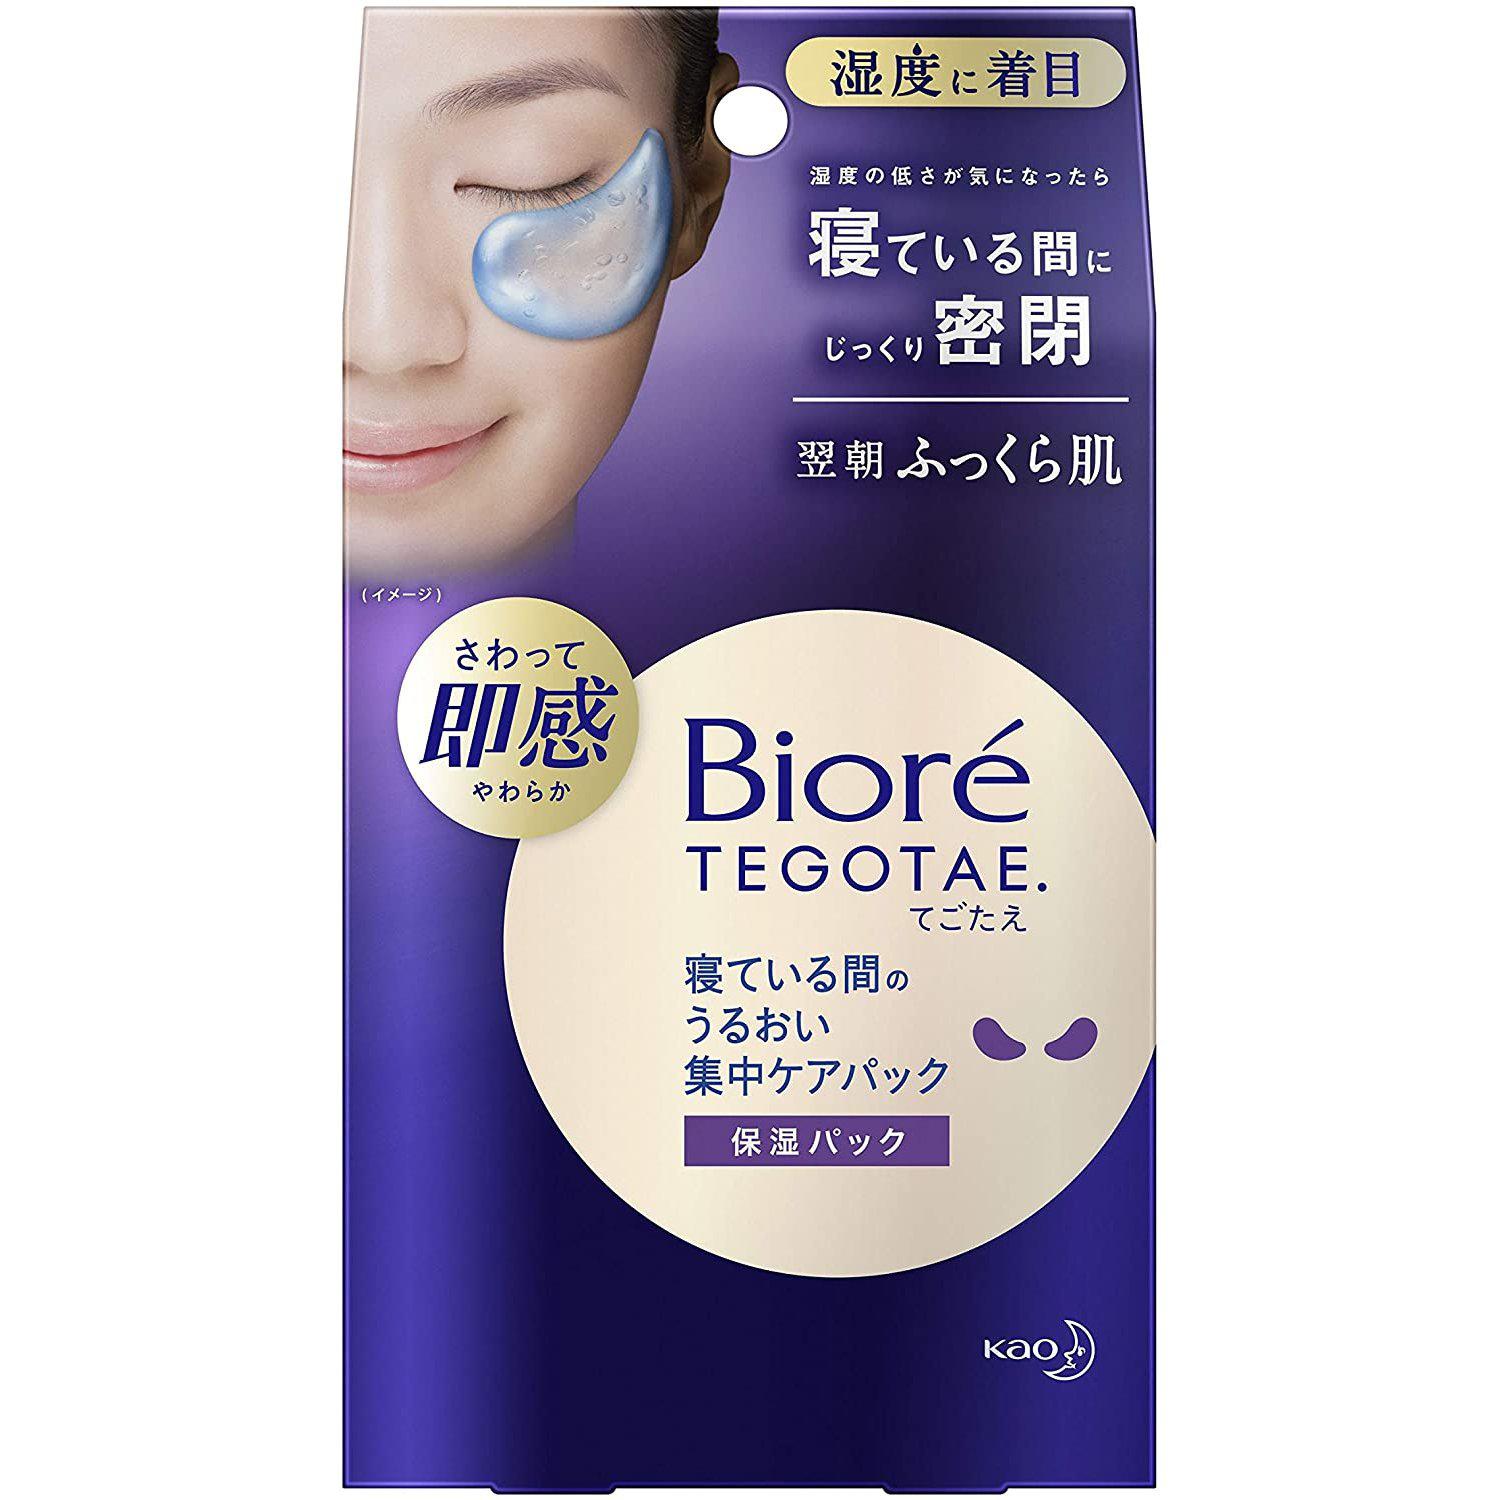 Kao Bioré Tegotae Eye Mask Pack 16 Patches